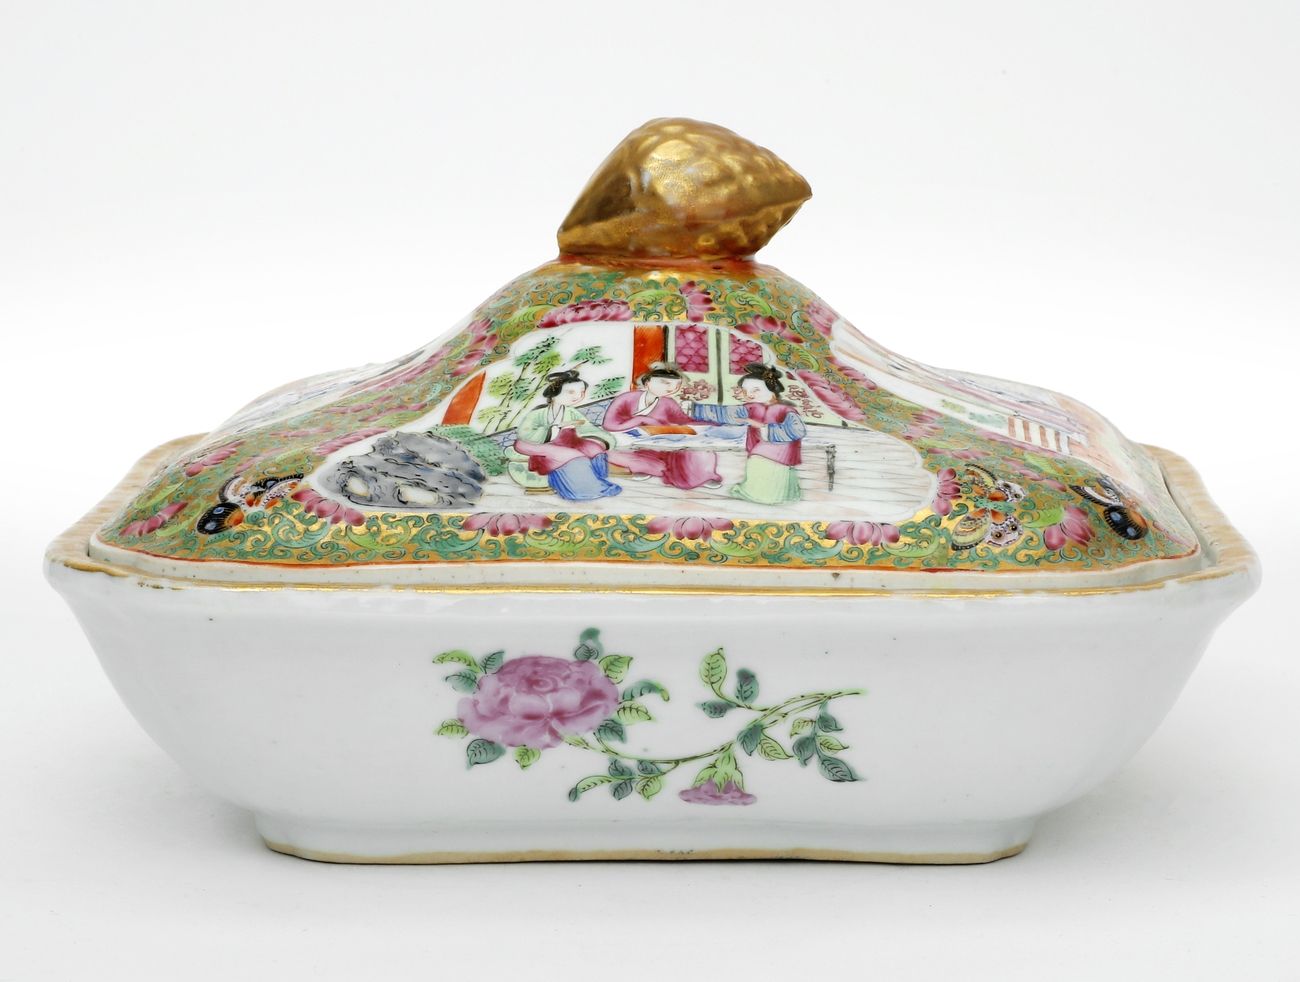 Null 中国，19世纪
广州瓷器的盖碗，有法米勒珐琅彩装饰的卡通人物。
长度：23厘米